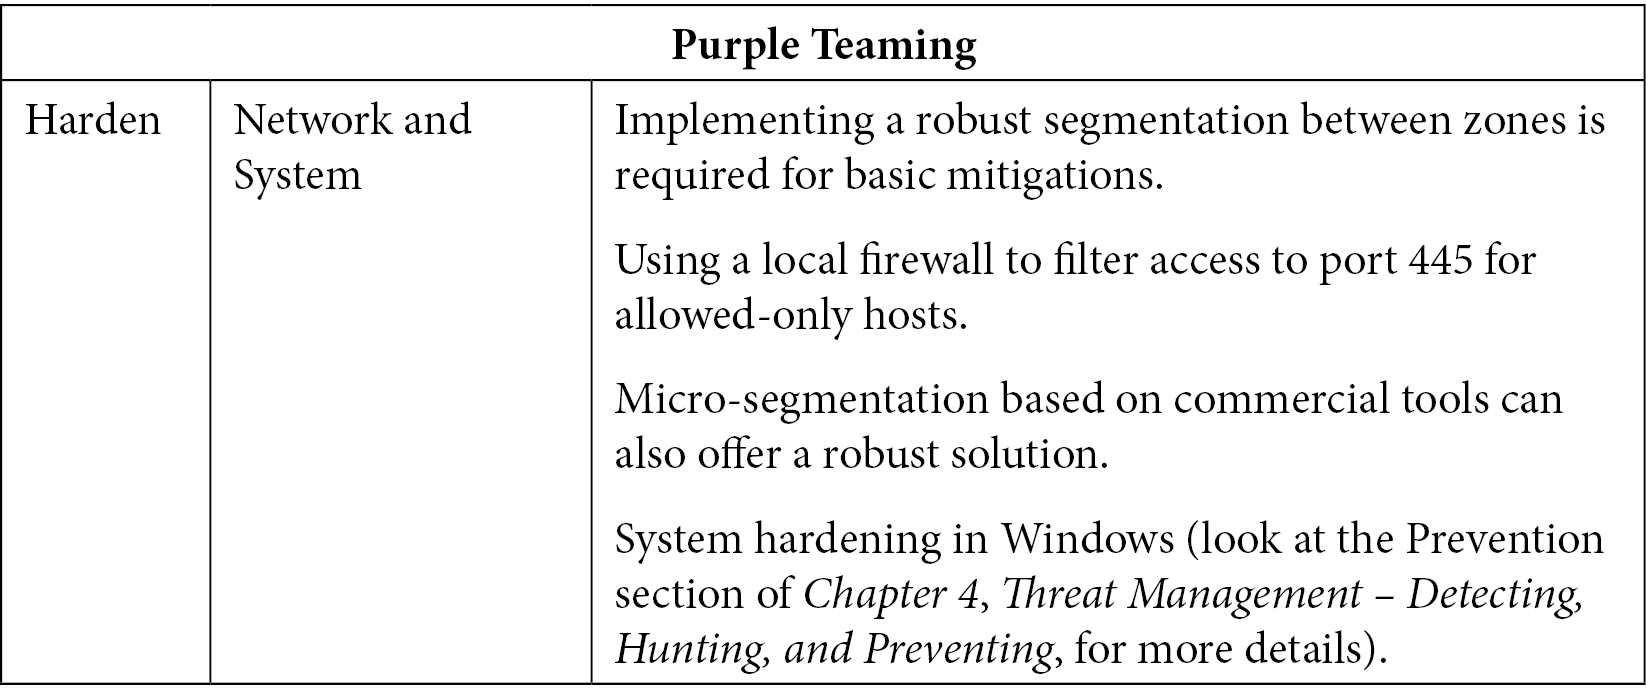 Table 10.16 – Purple Teaming T1021
